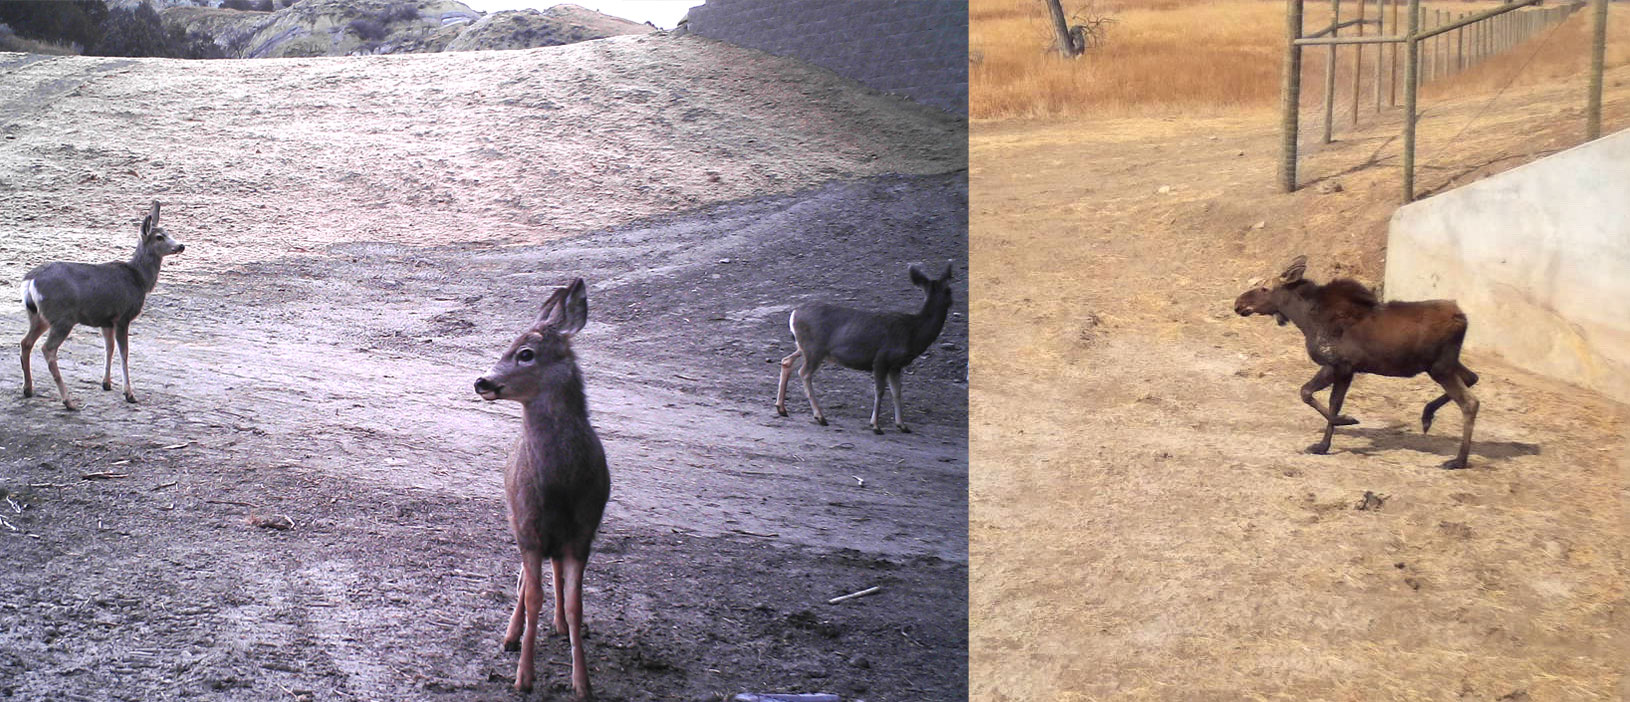 Mule deer (left) and moose (right) at wildlife crossing